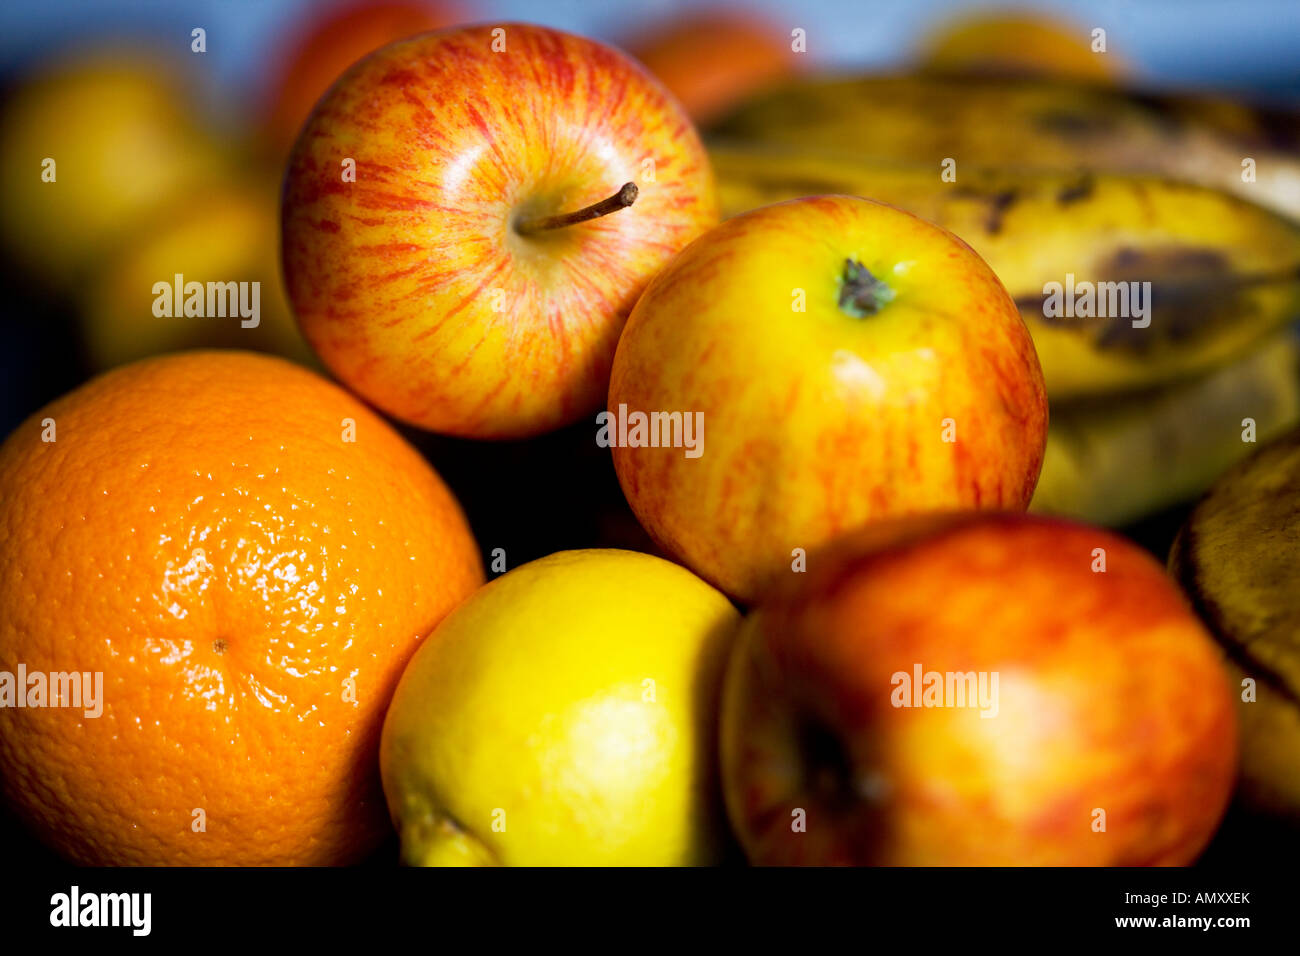 Apples orange Lemon and Bananas Stock Photo